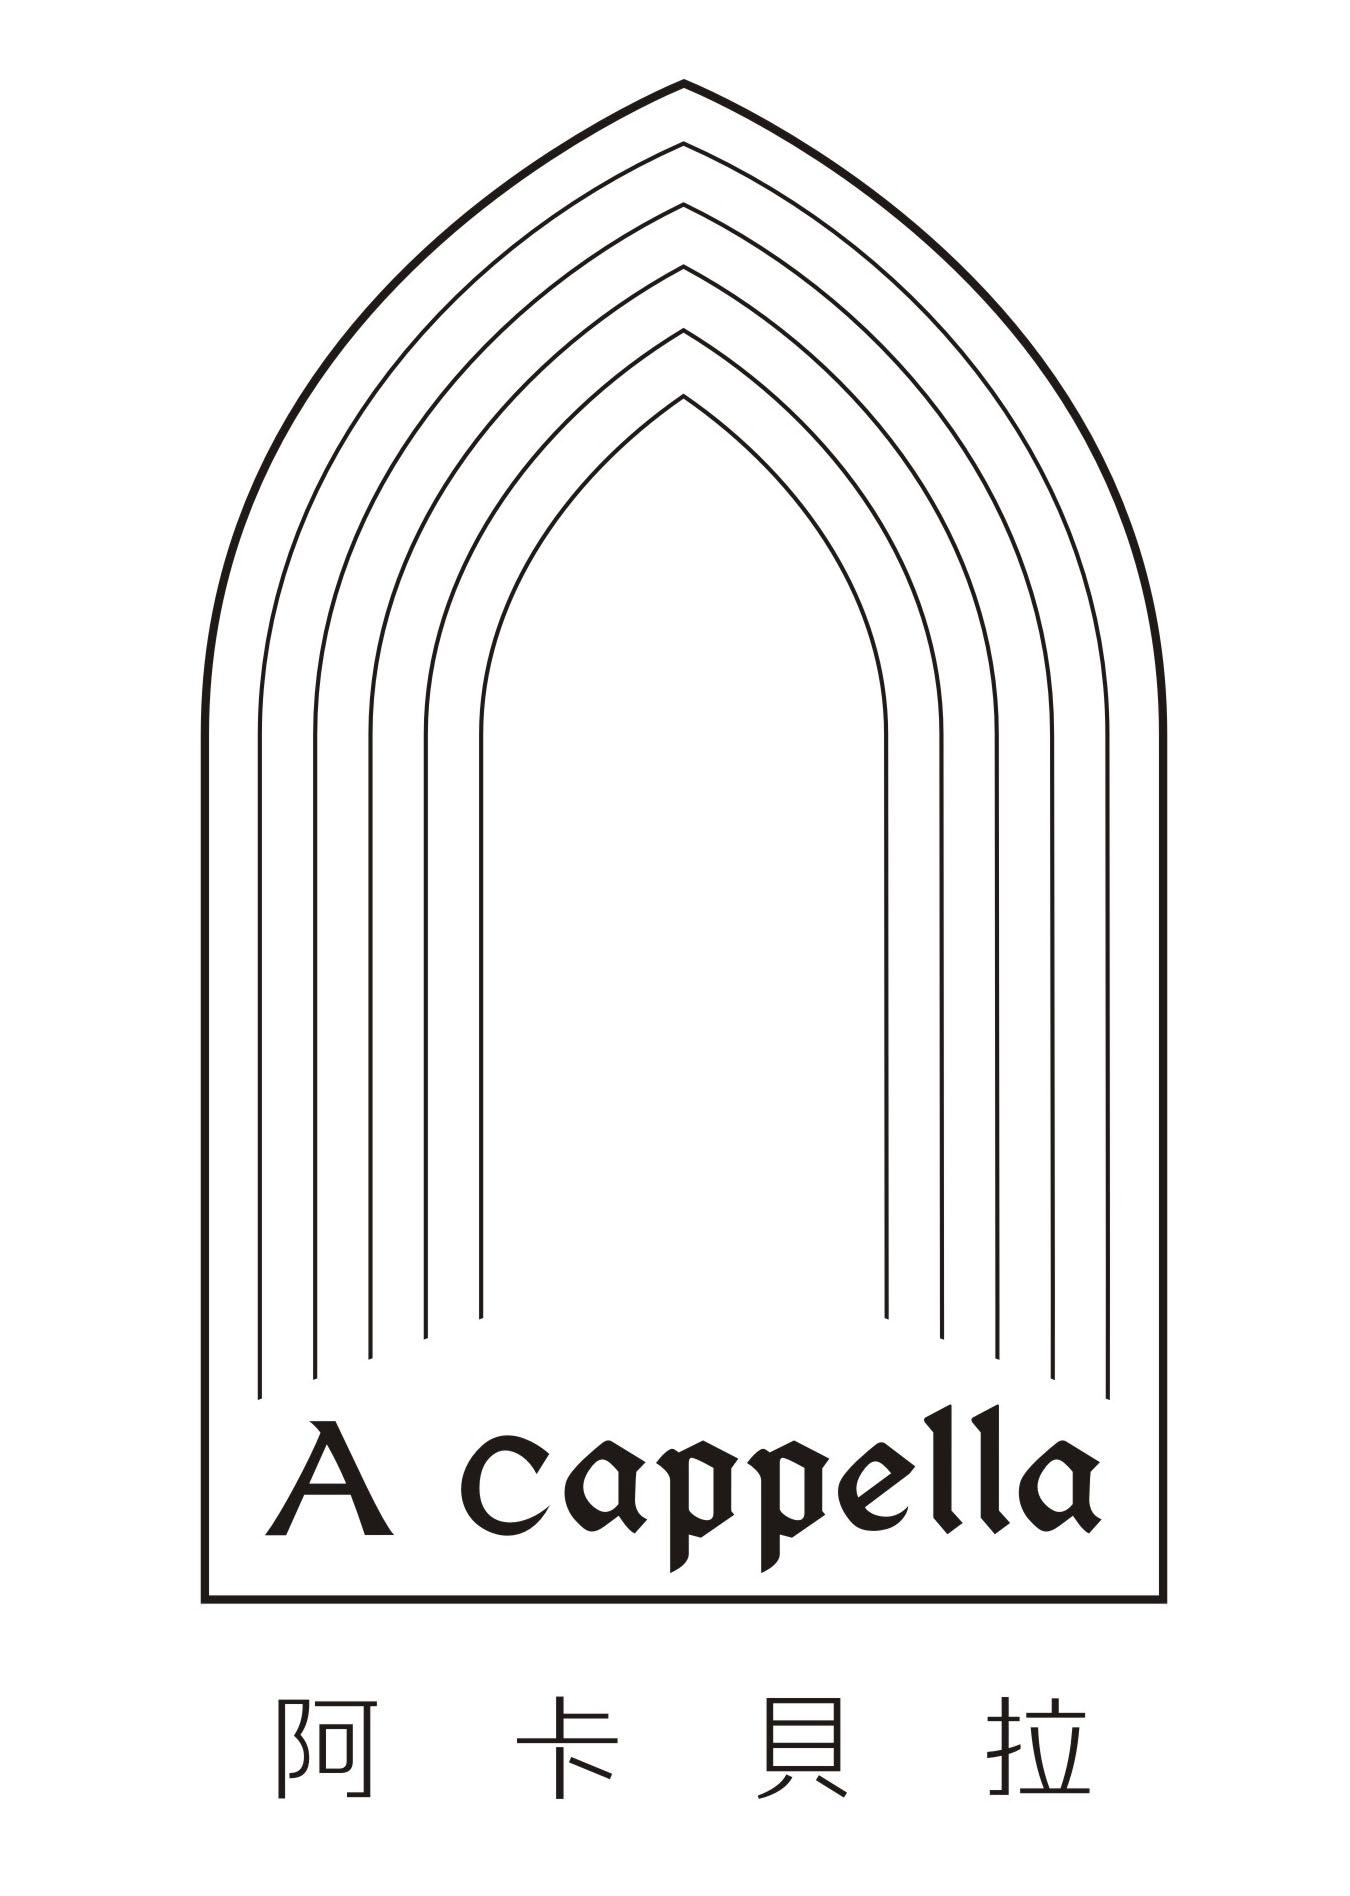 arabica logo图片